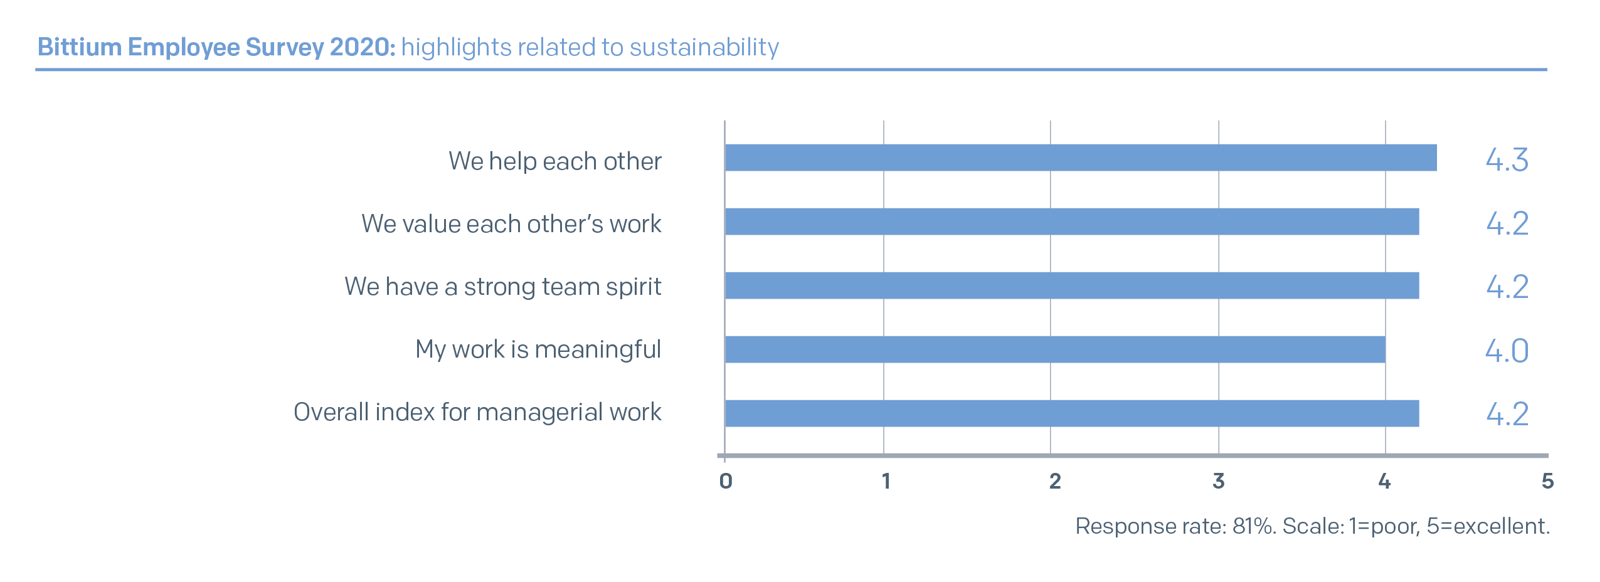 Bittium Employee Survey 2020: highlights related to sustainability